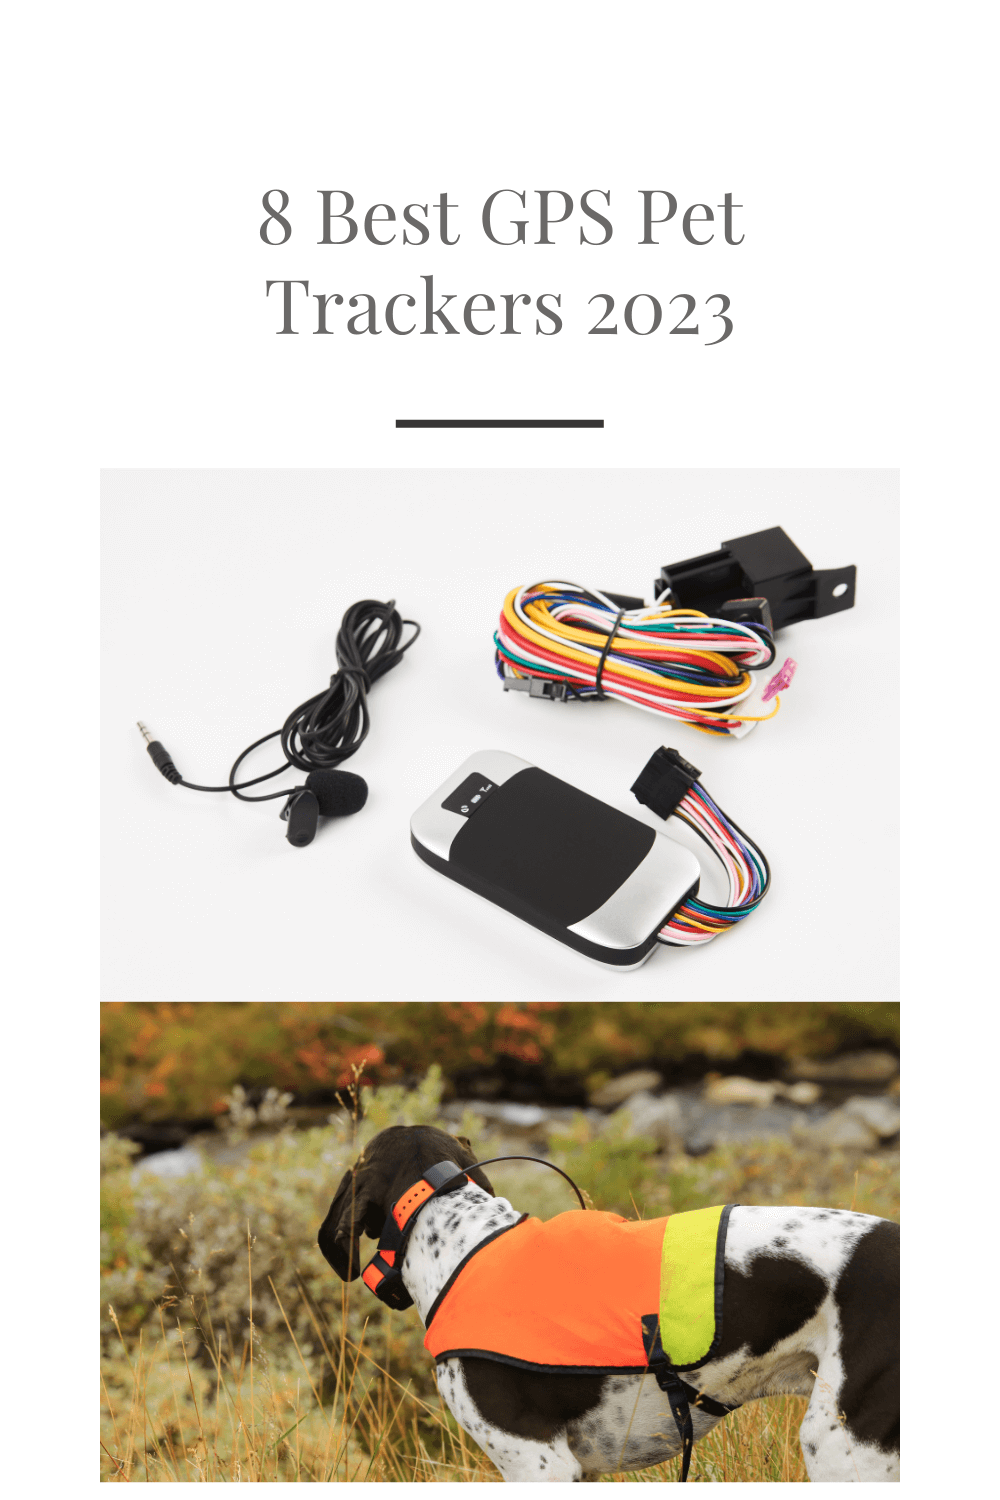 8 Best GPS Pet Trackers 2023